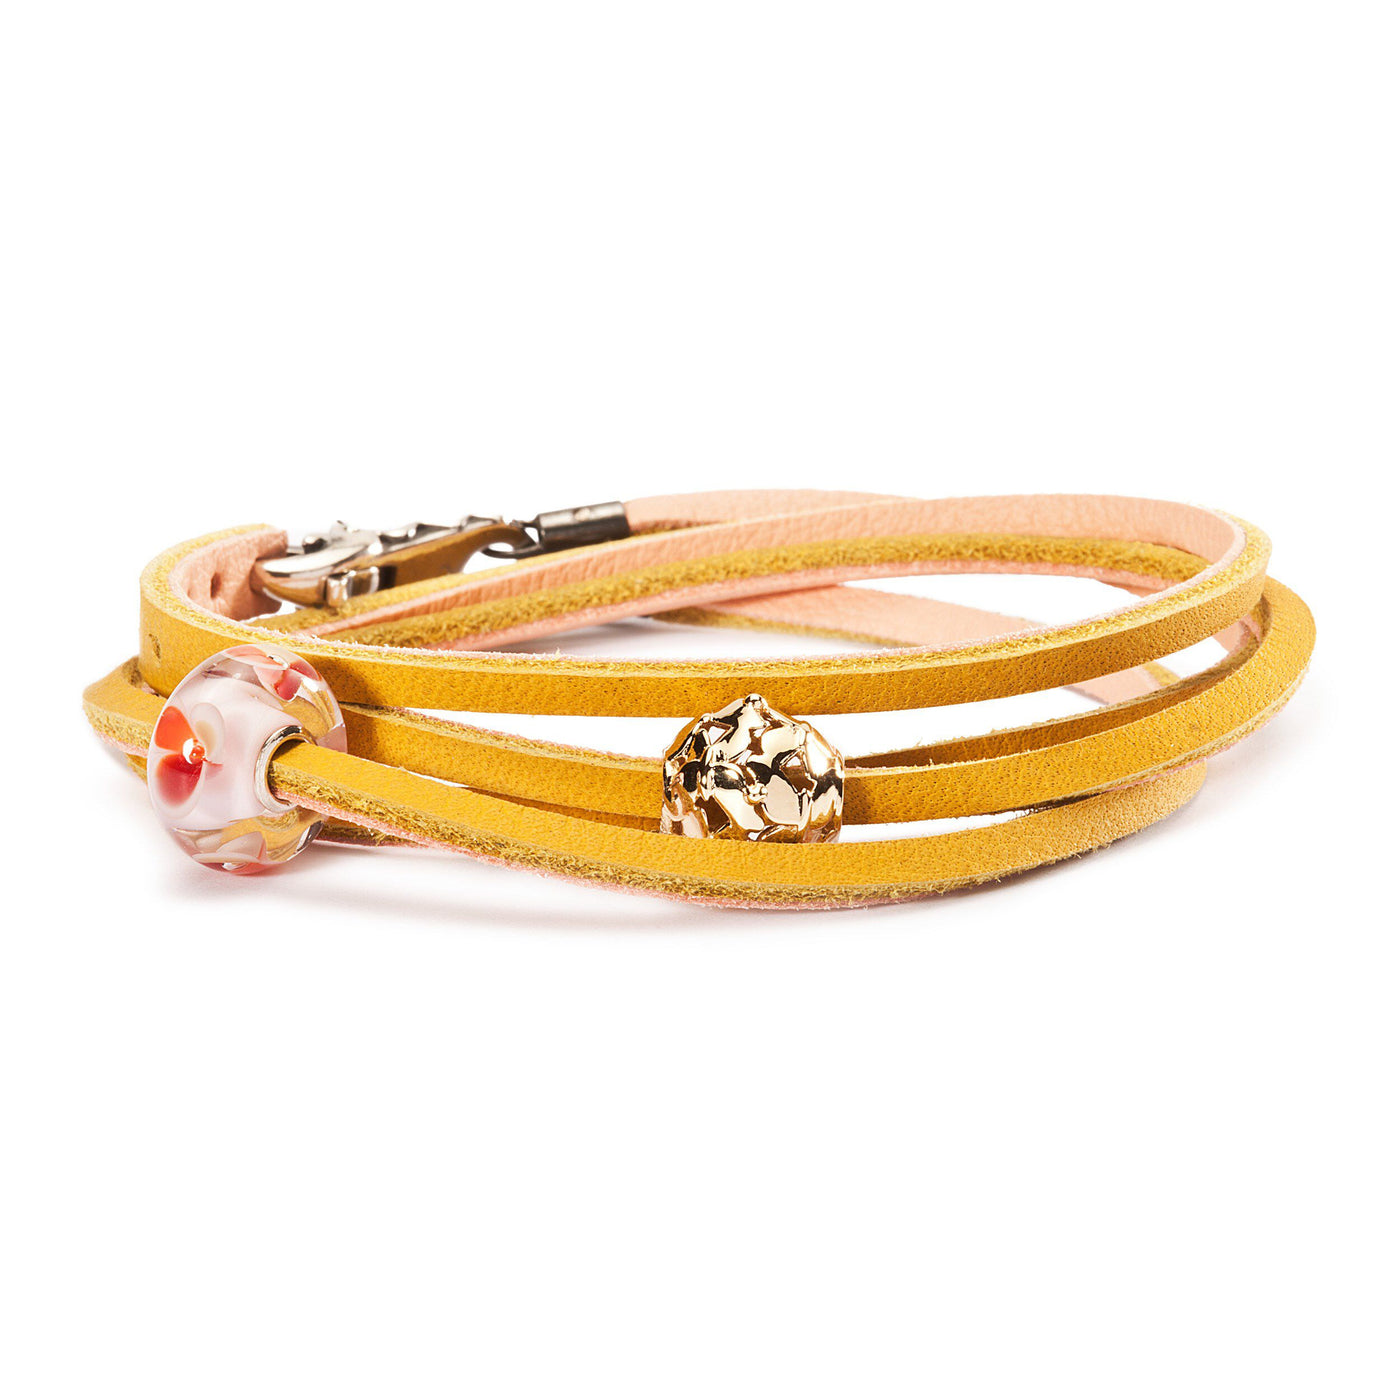 Leather Bracelet Yellow/Light Pink - Trollbeads Canada